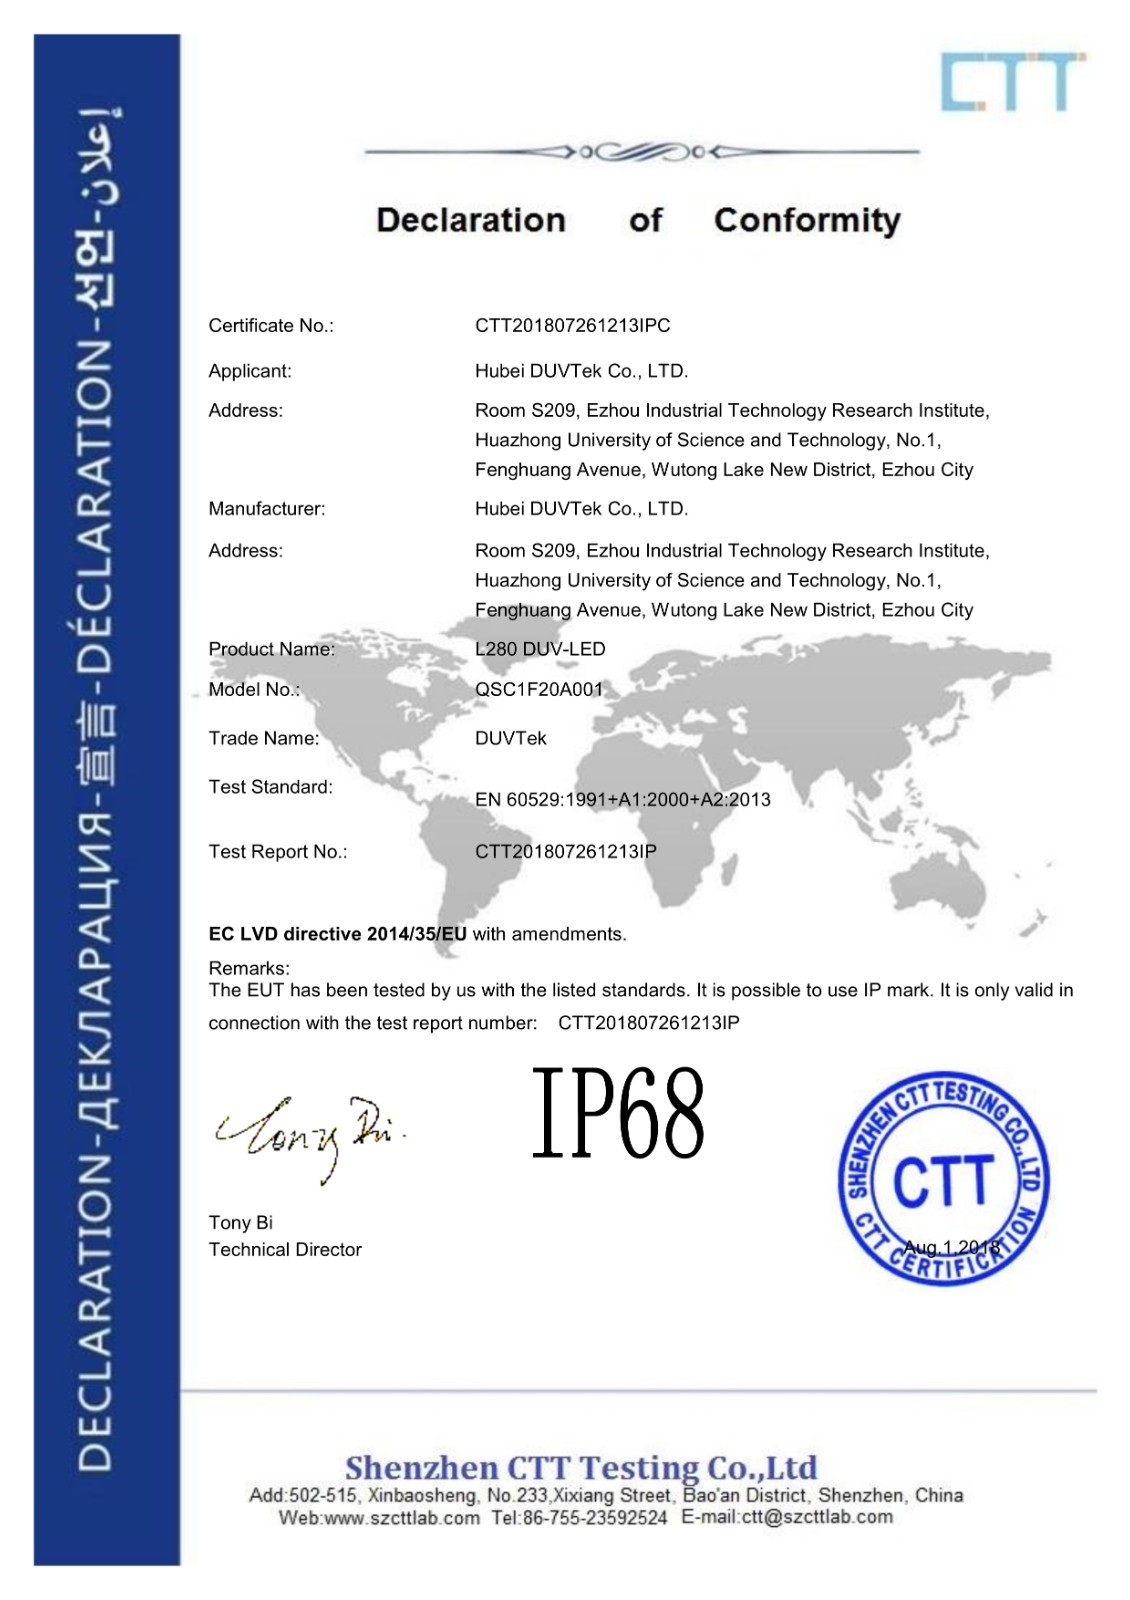 2-IP68证书-CTT201807261213IPC%U00A0certificate_1.jpg